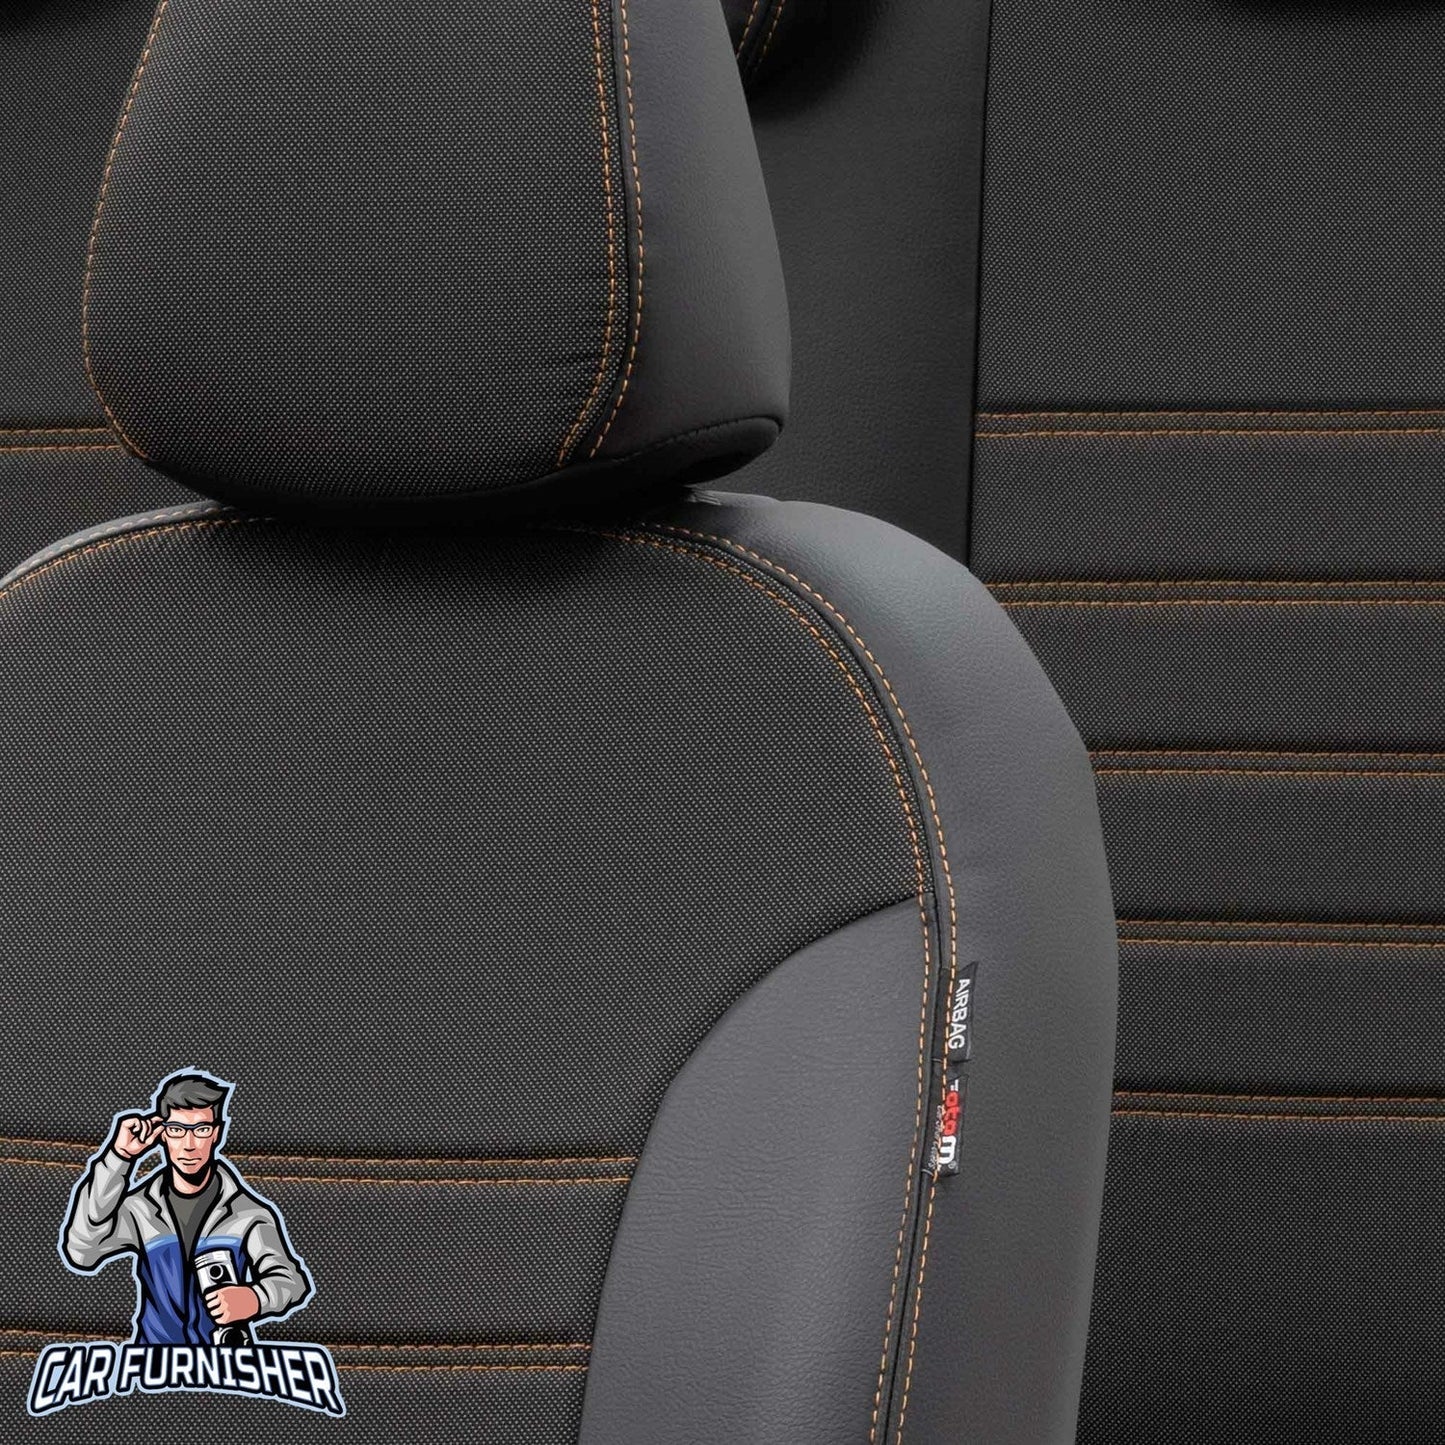 Fiat Marea Seat Covers Paris Leather & Jacquard Design Dark Beige Leather & Jacquard Fabric